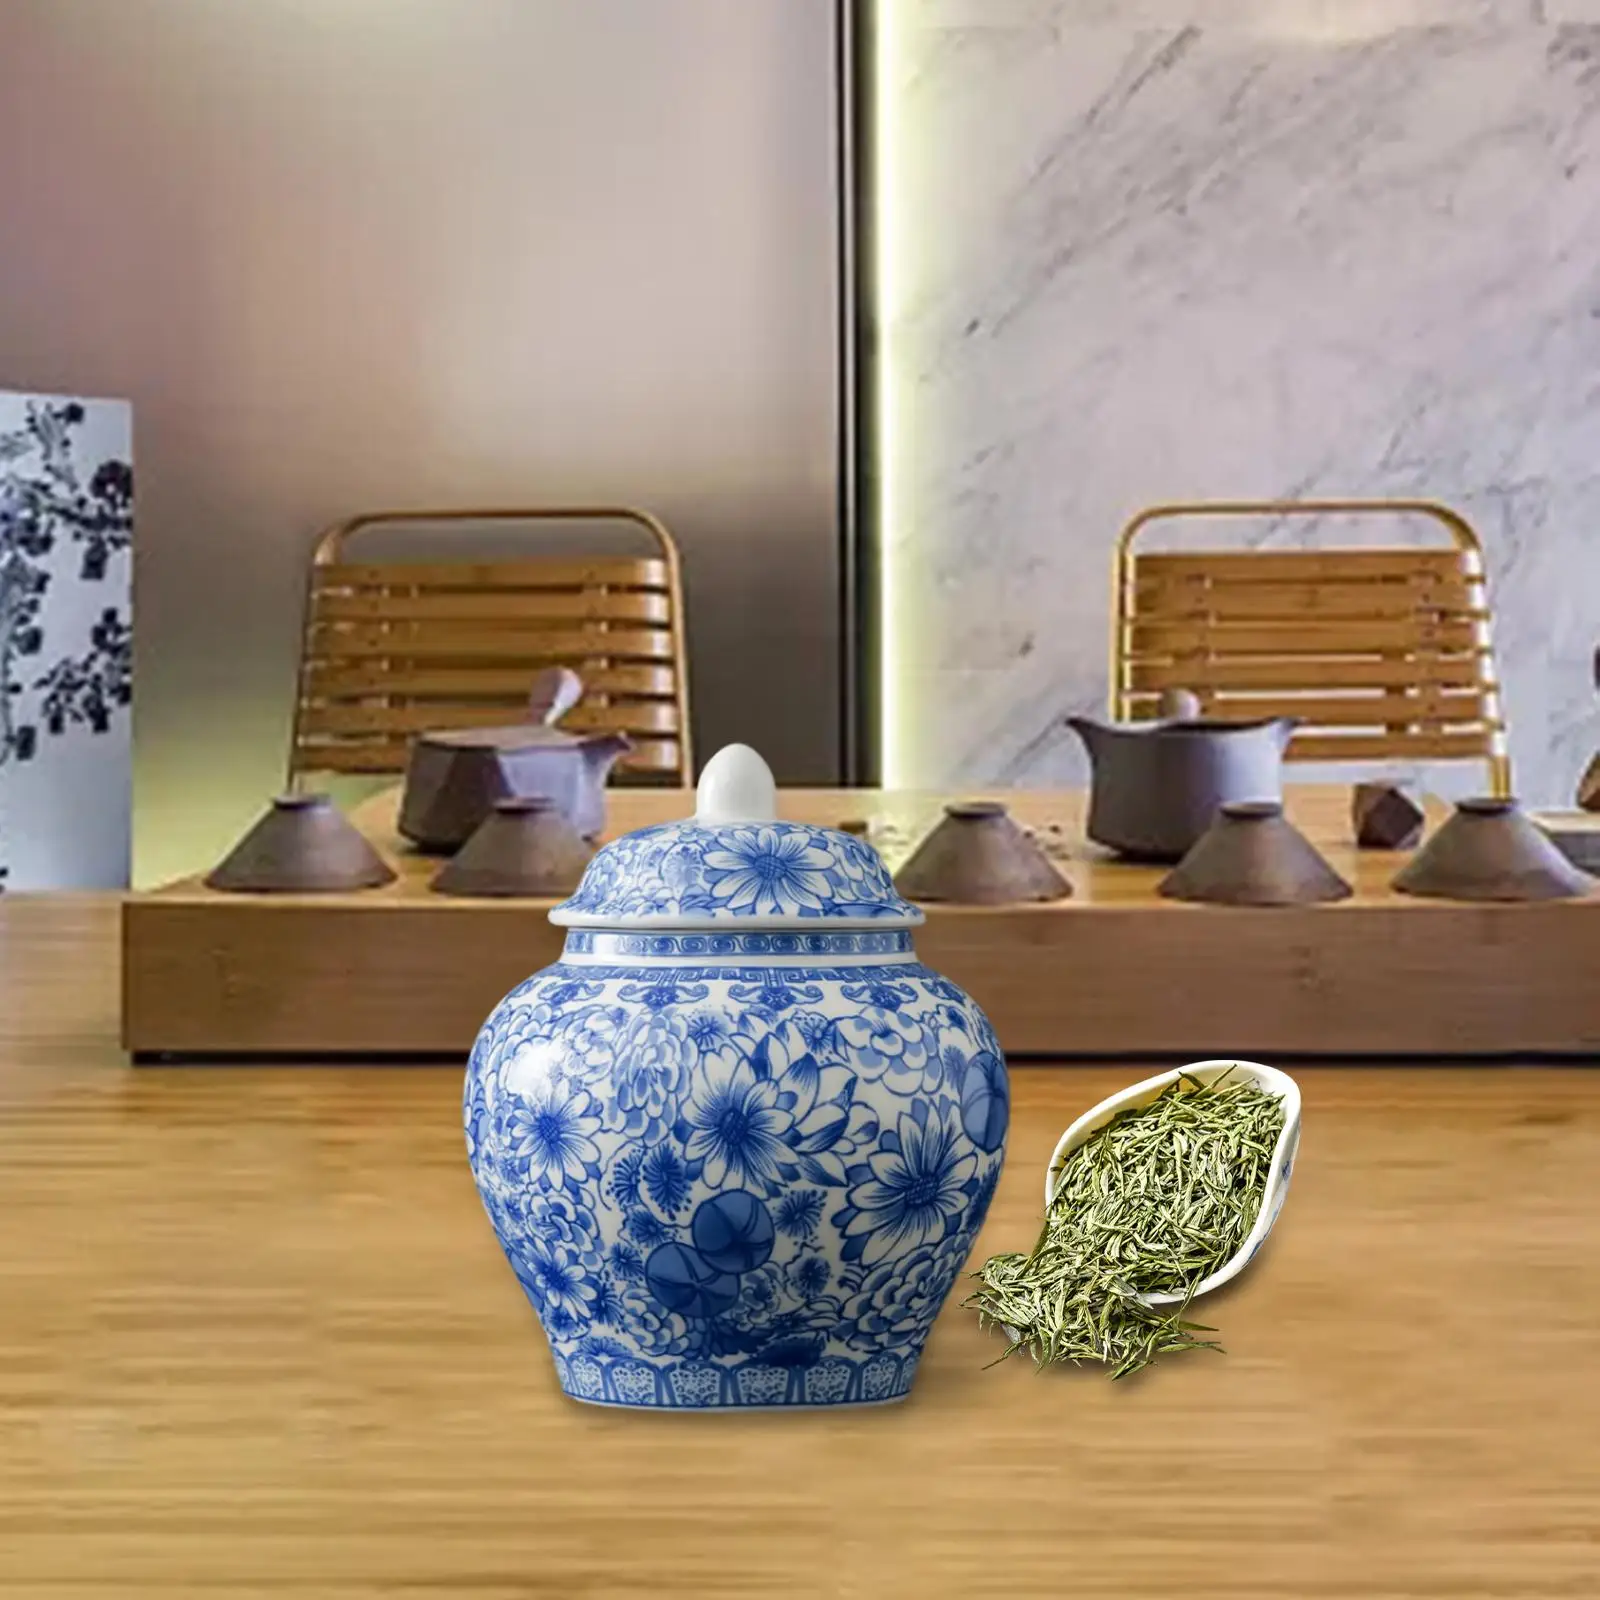 Tea Canister Floral Handicraft Table Centerpieces Oriental Style Home Decoration Blue White Porcelain Ginger Jar Decorative Vase